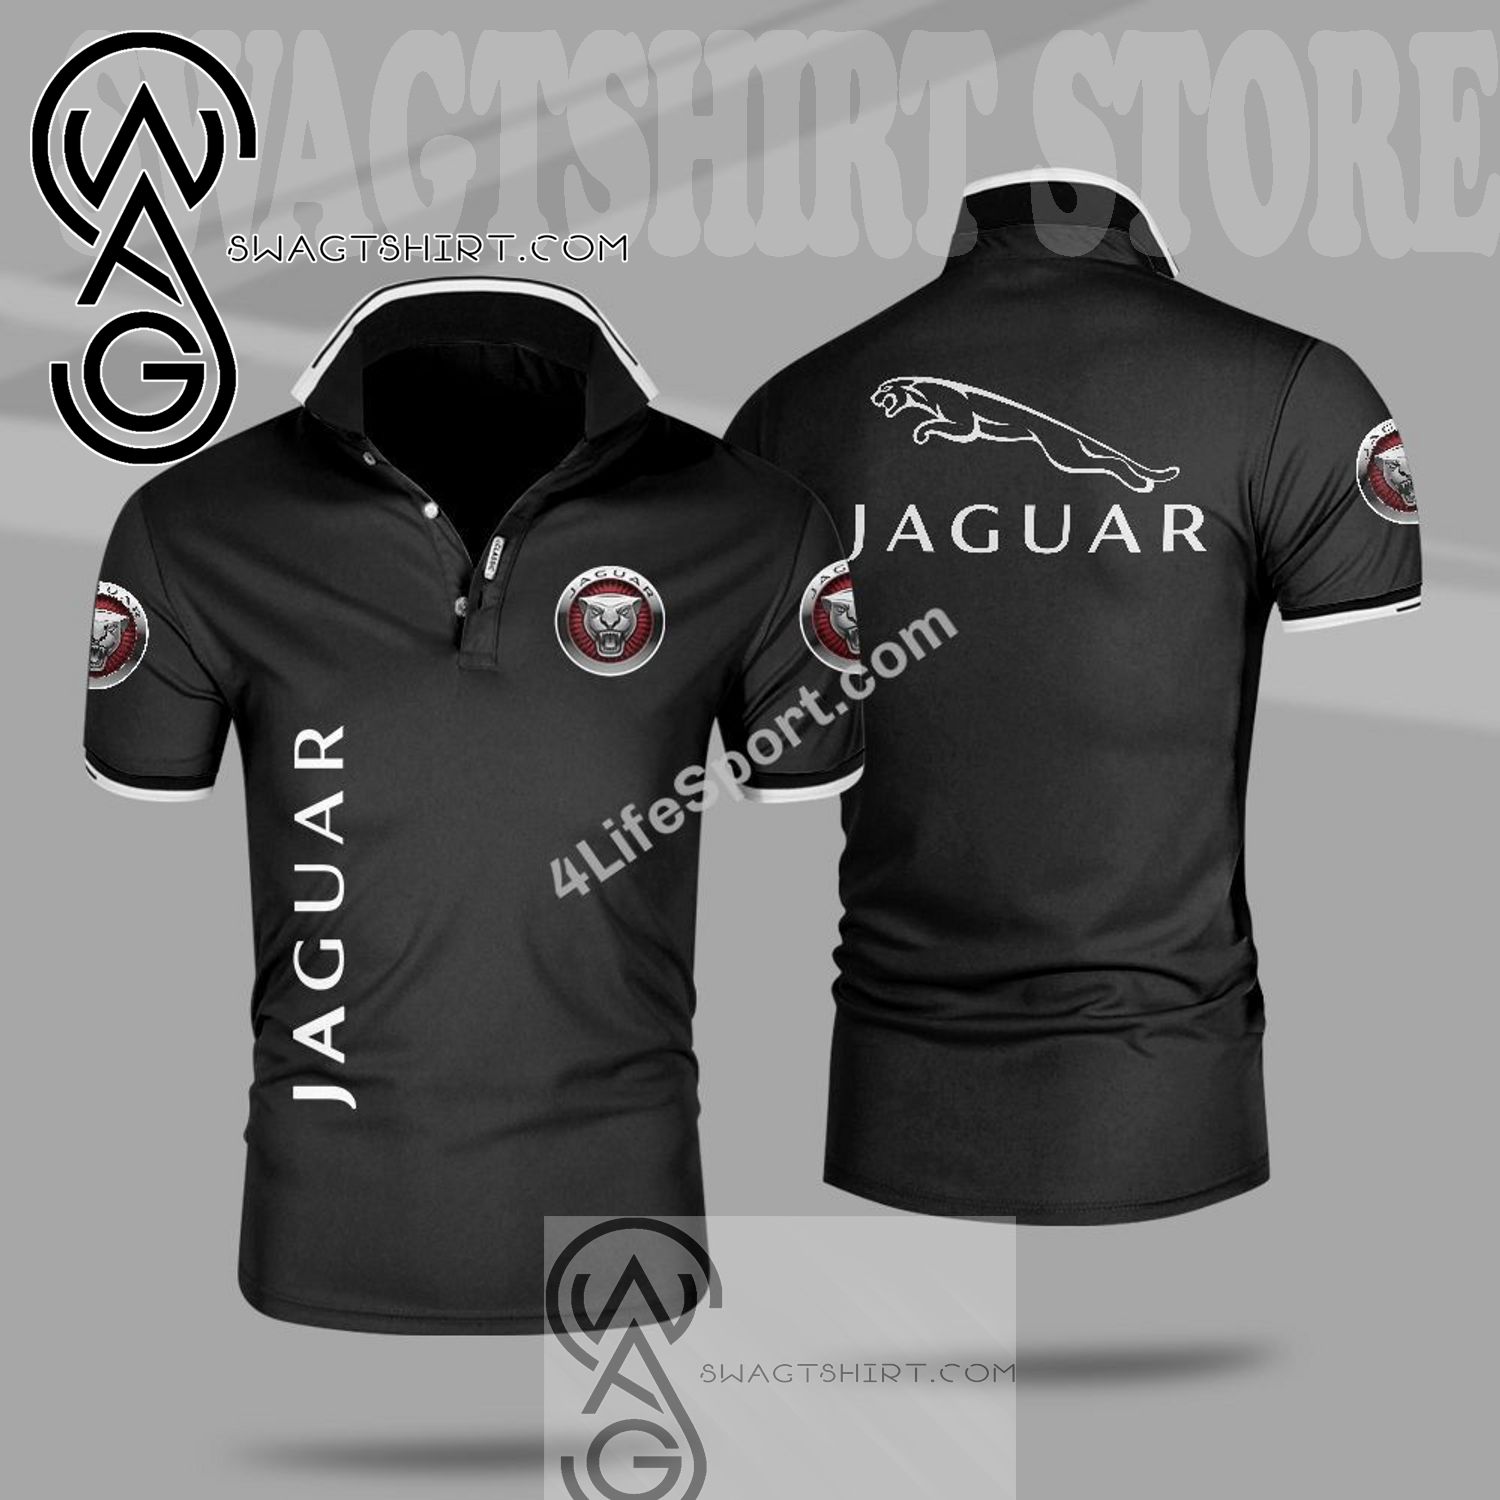 jaguar polo shirt